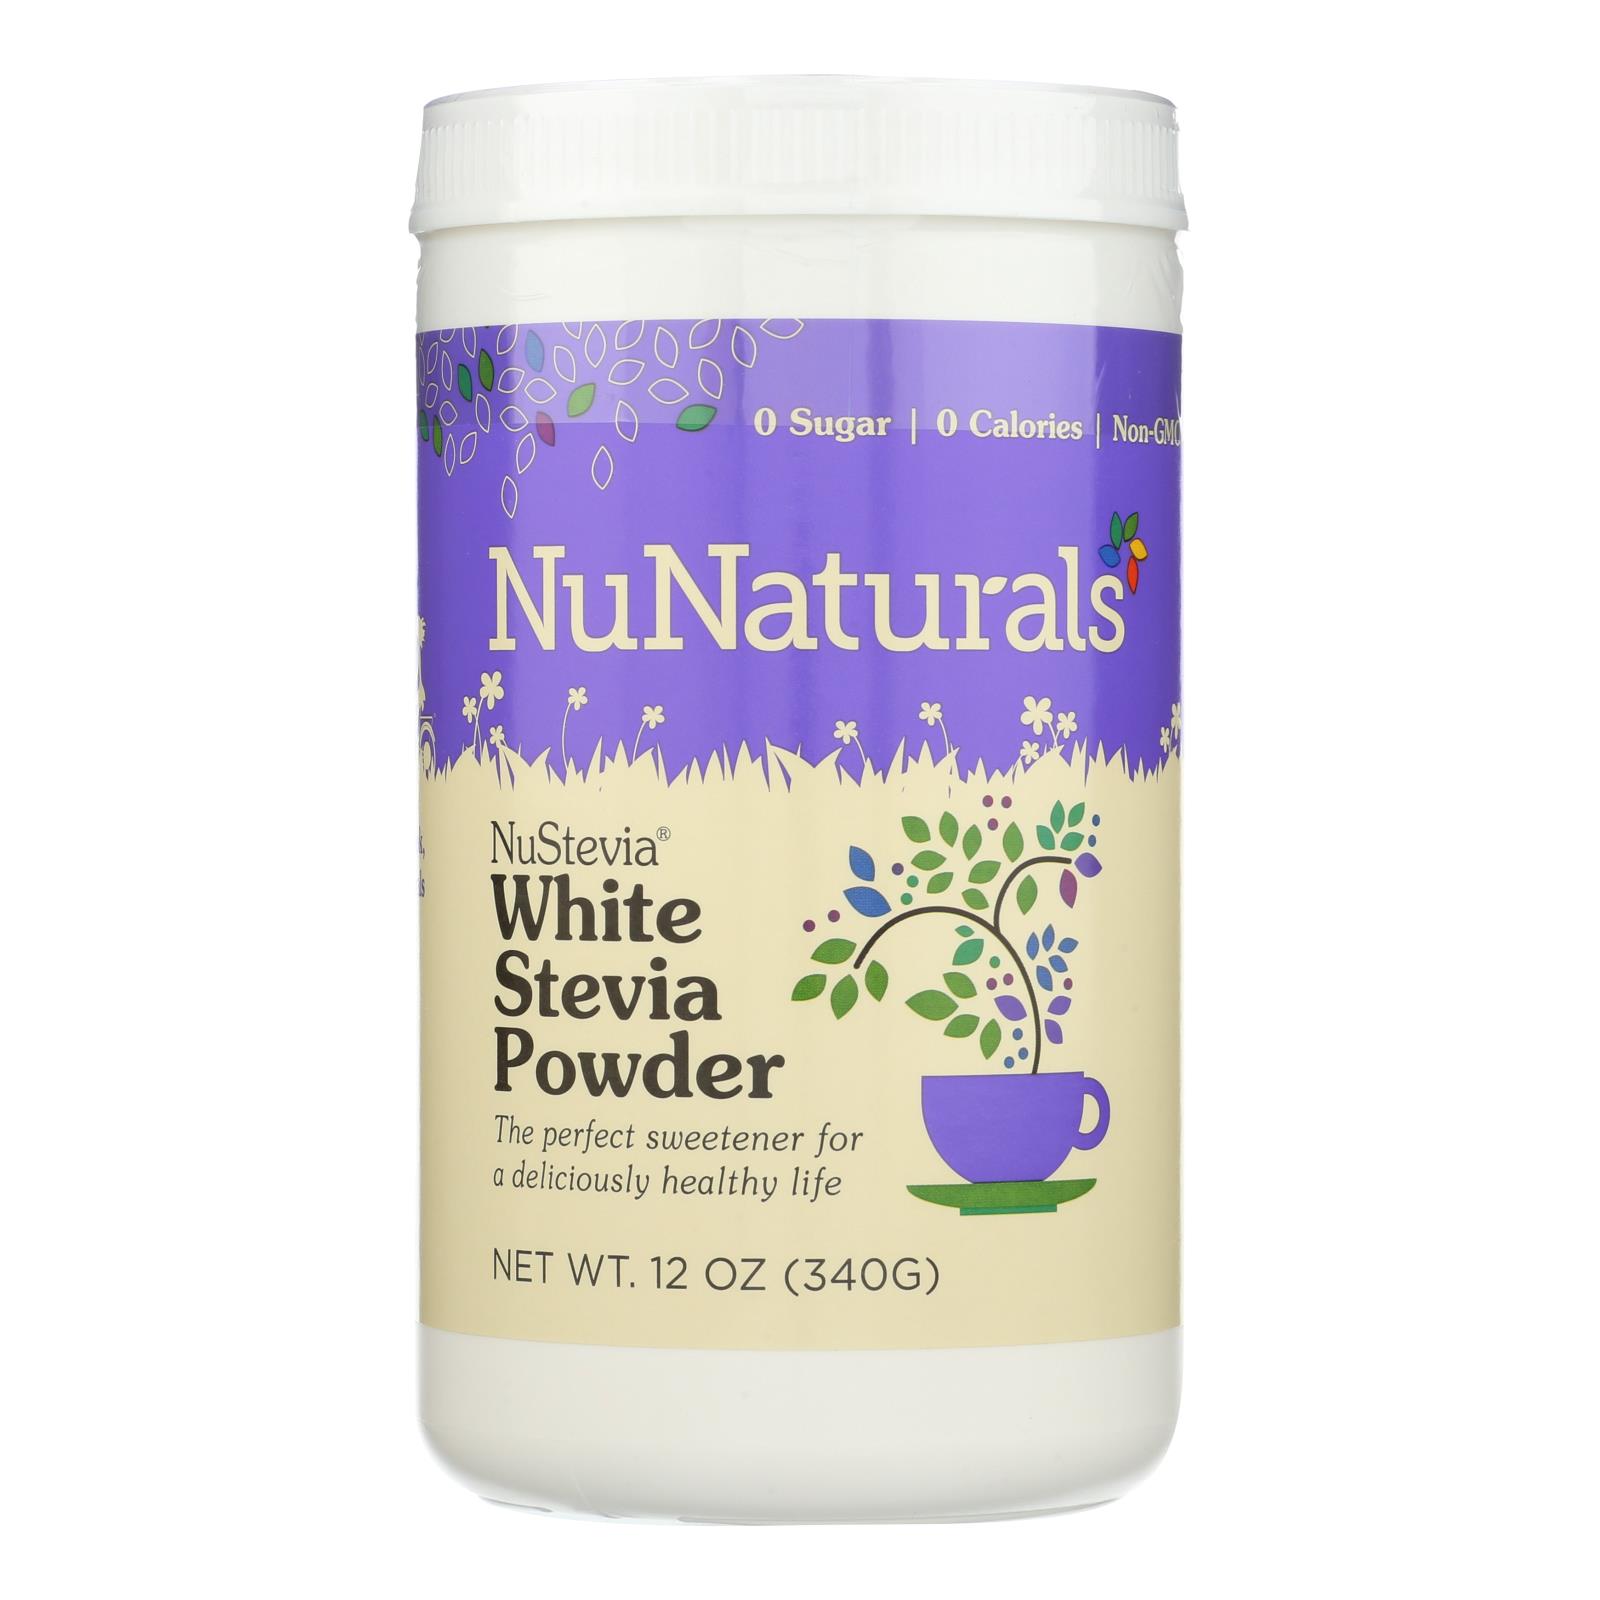 Nunaturals Nustevia White Stevia Powder - 1 Each - 12 OZ